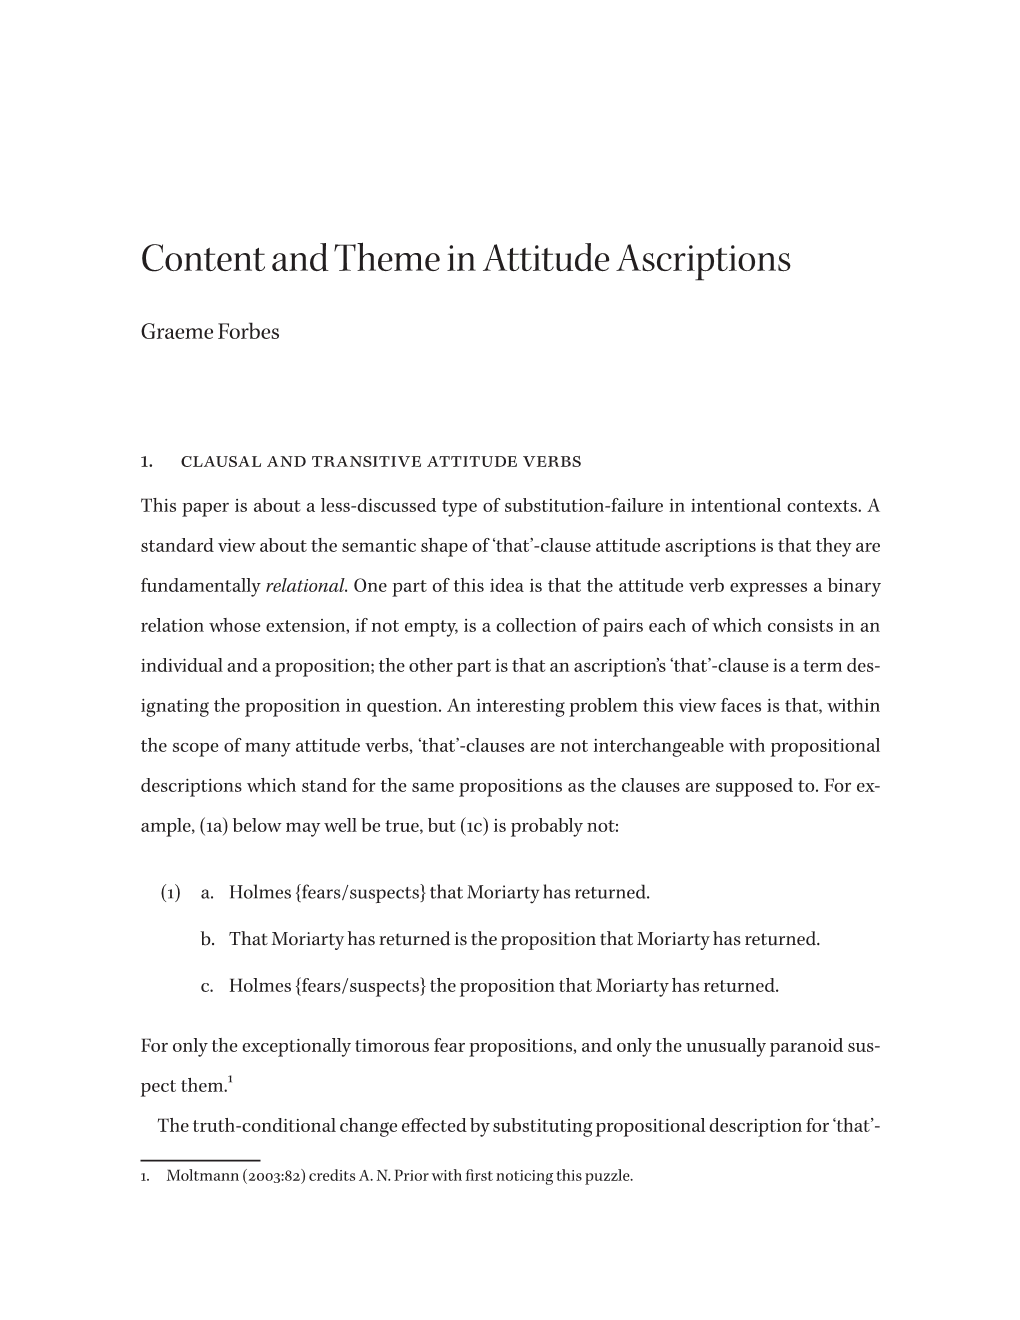 Content and Theme in Attitude Ascriptions